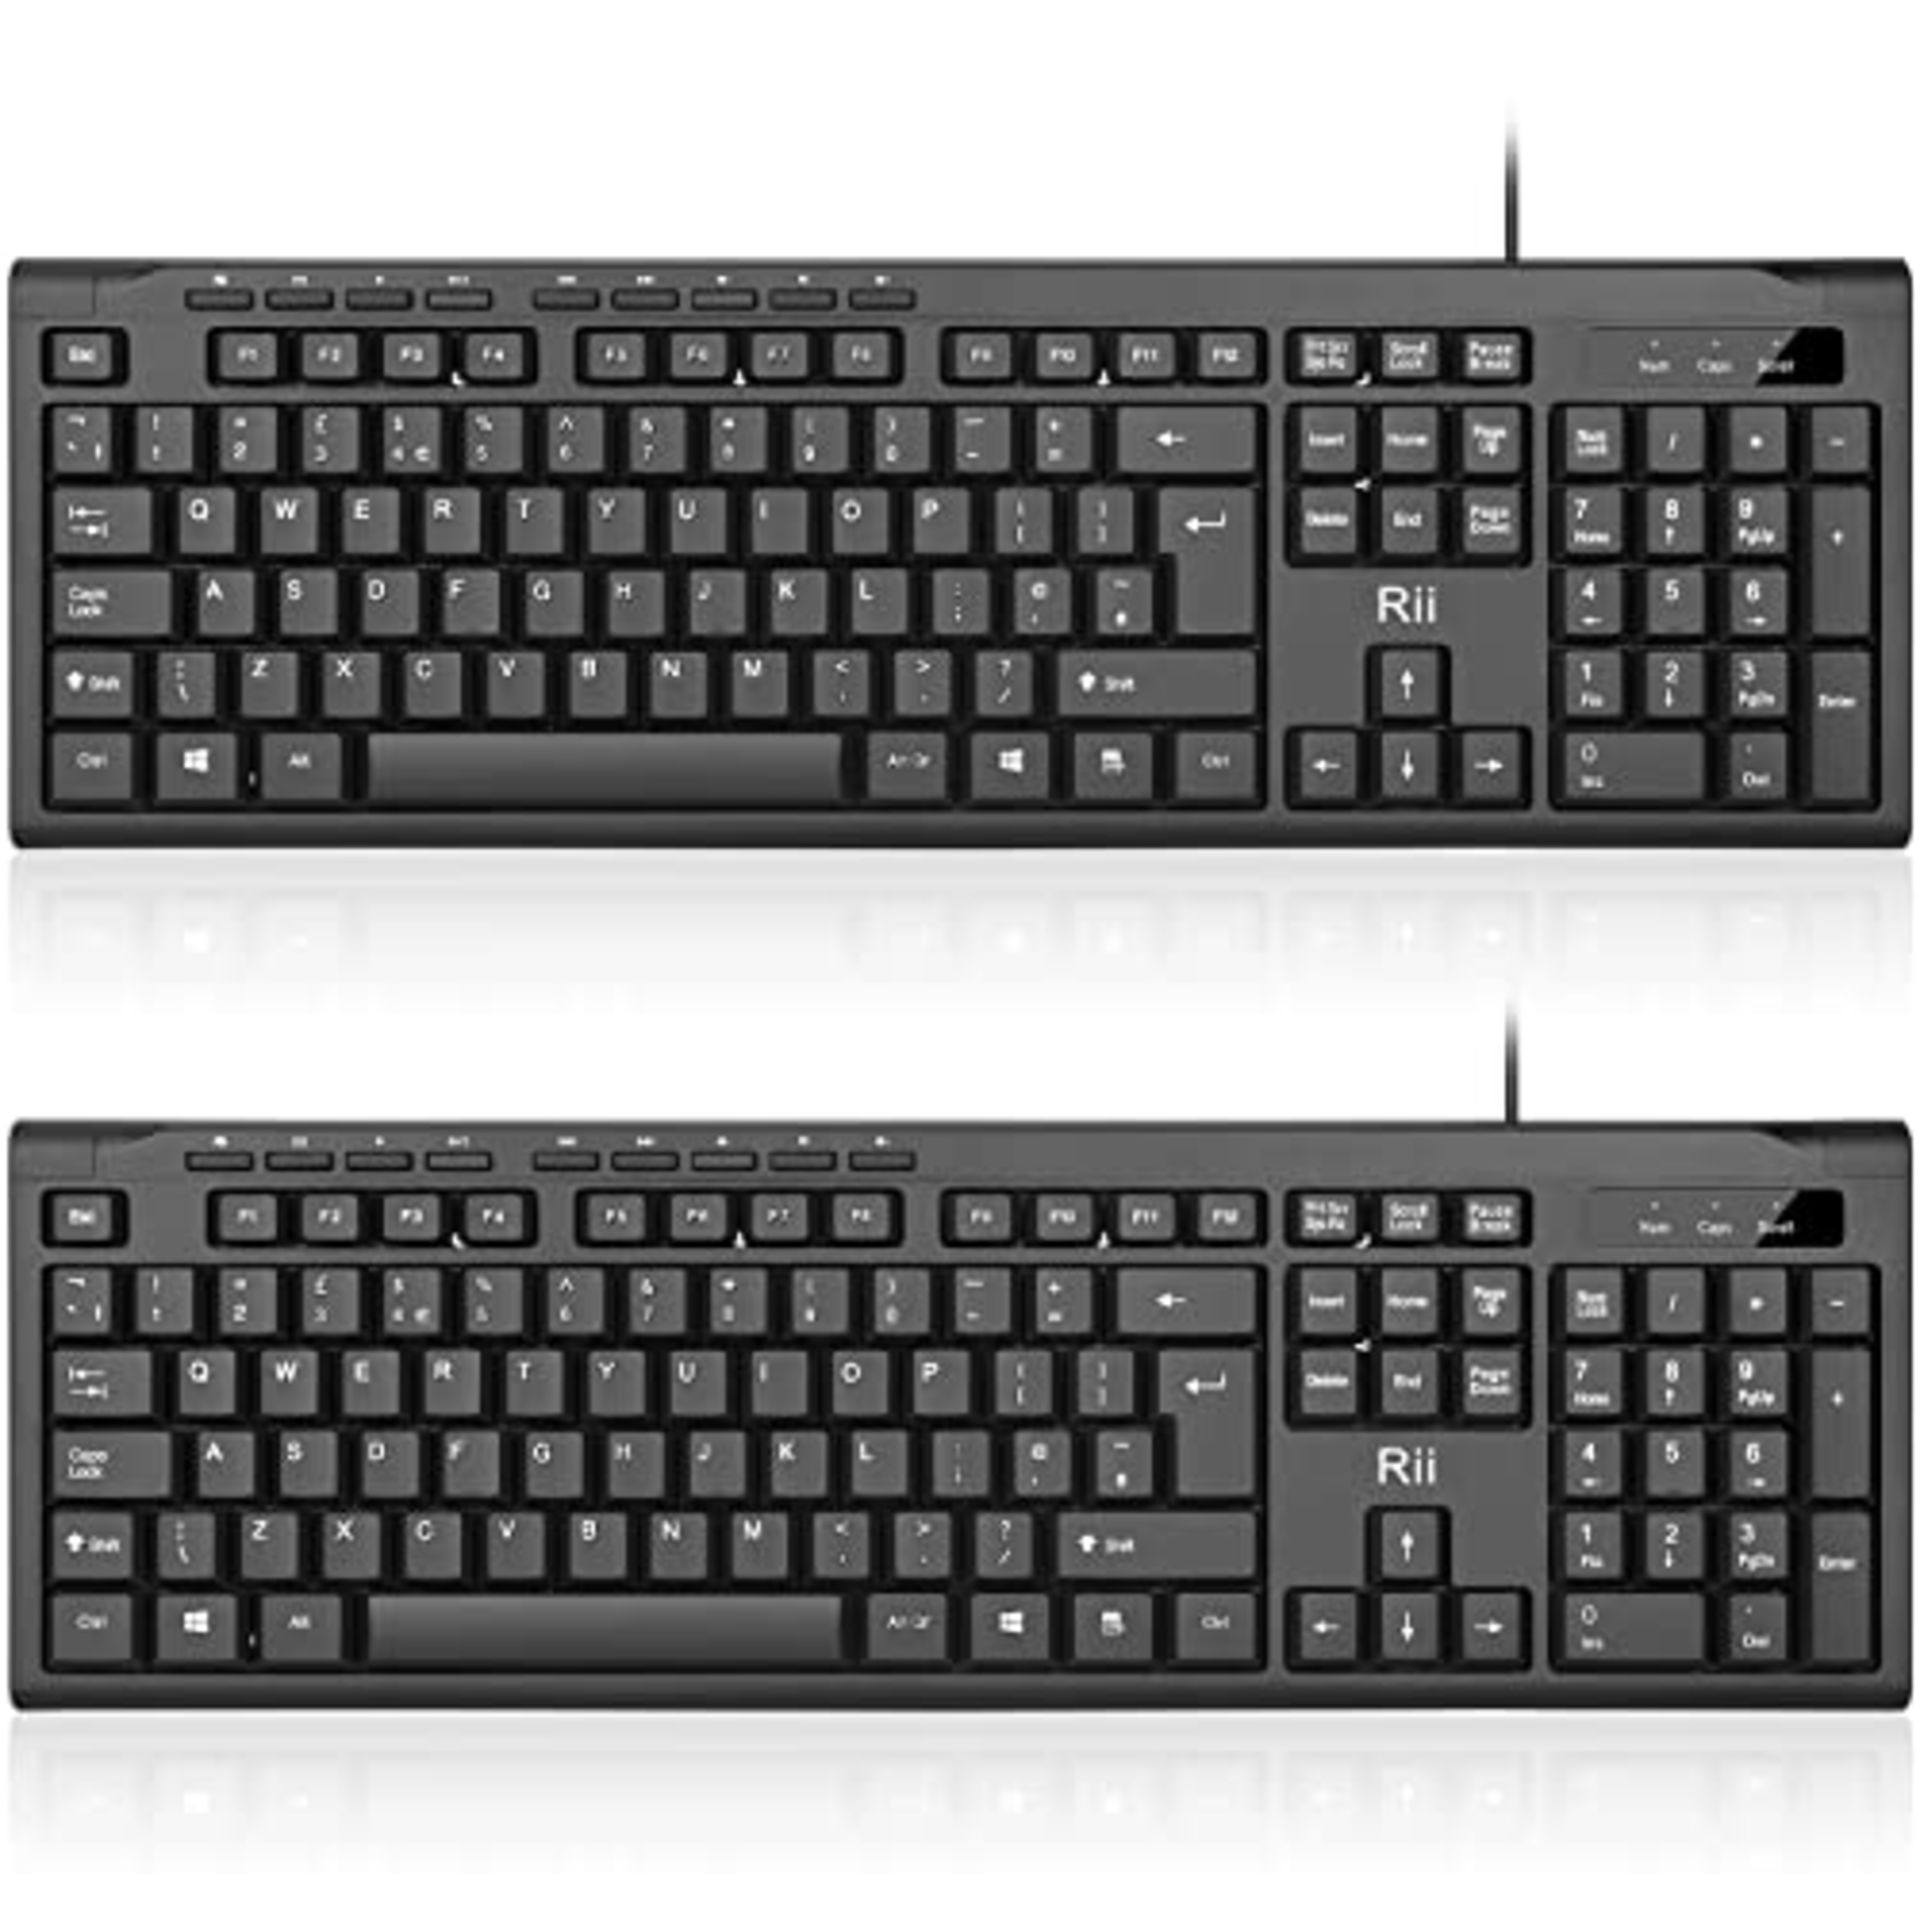 RRP £20.55 RK907 USB Wired Keyboard Full Size Office Keyboard